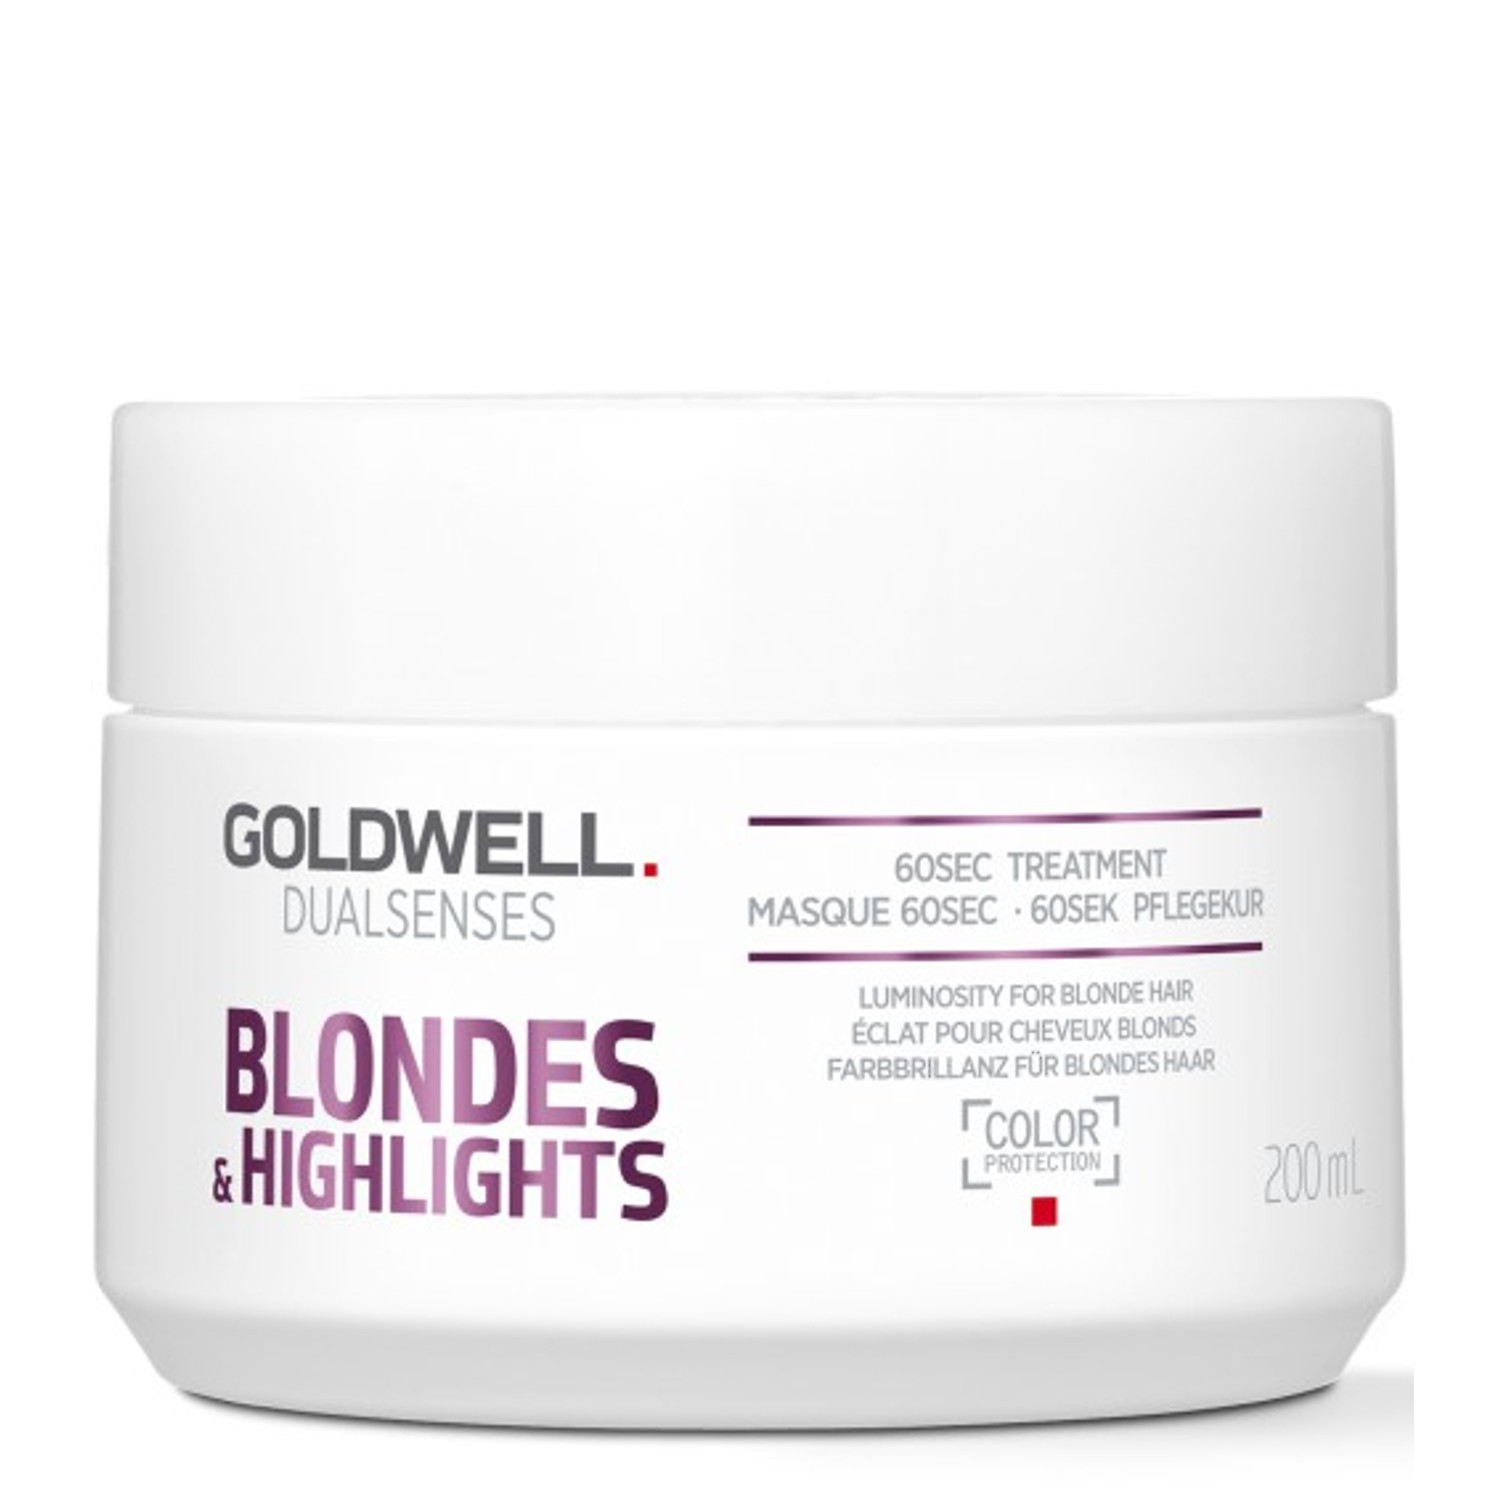 GOLDWELL Dualsenses Blondes & Highlights 60Sec Treatment 200 ml